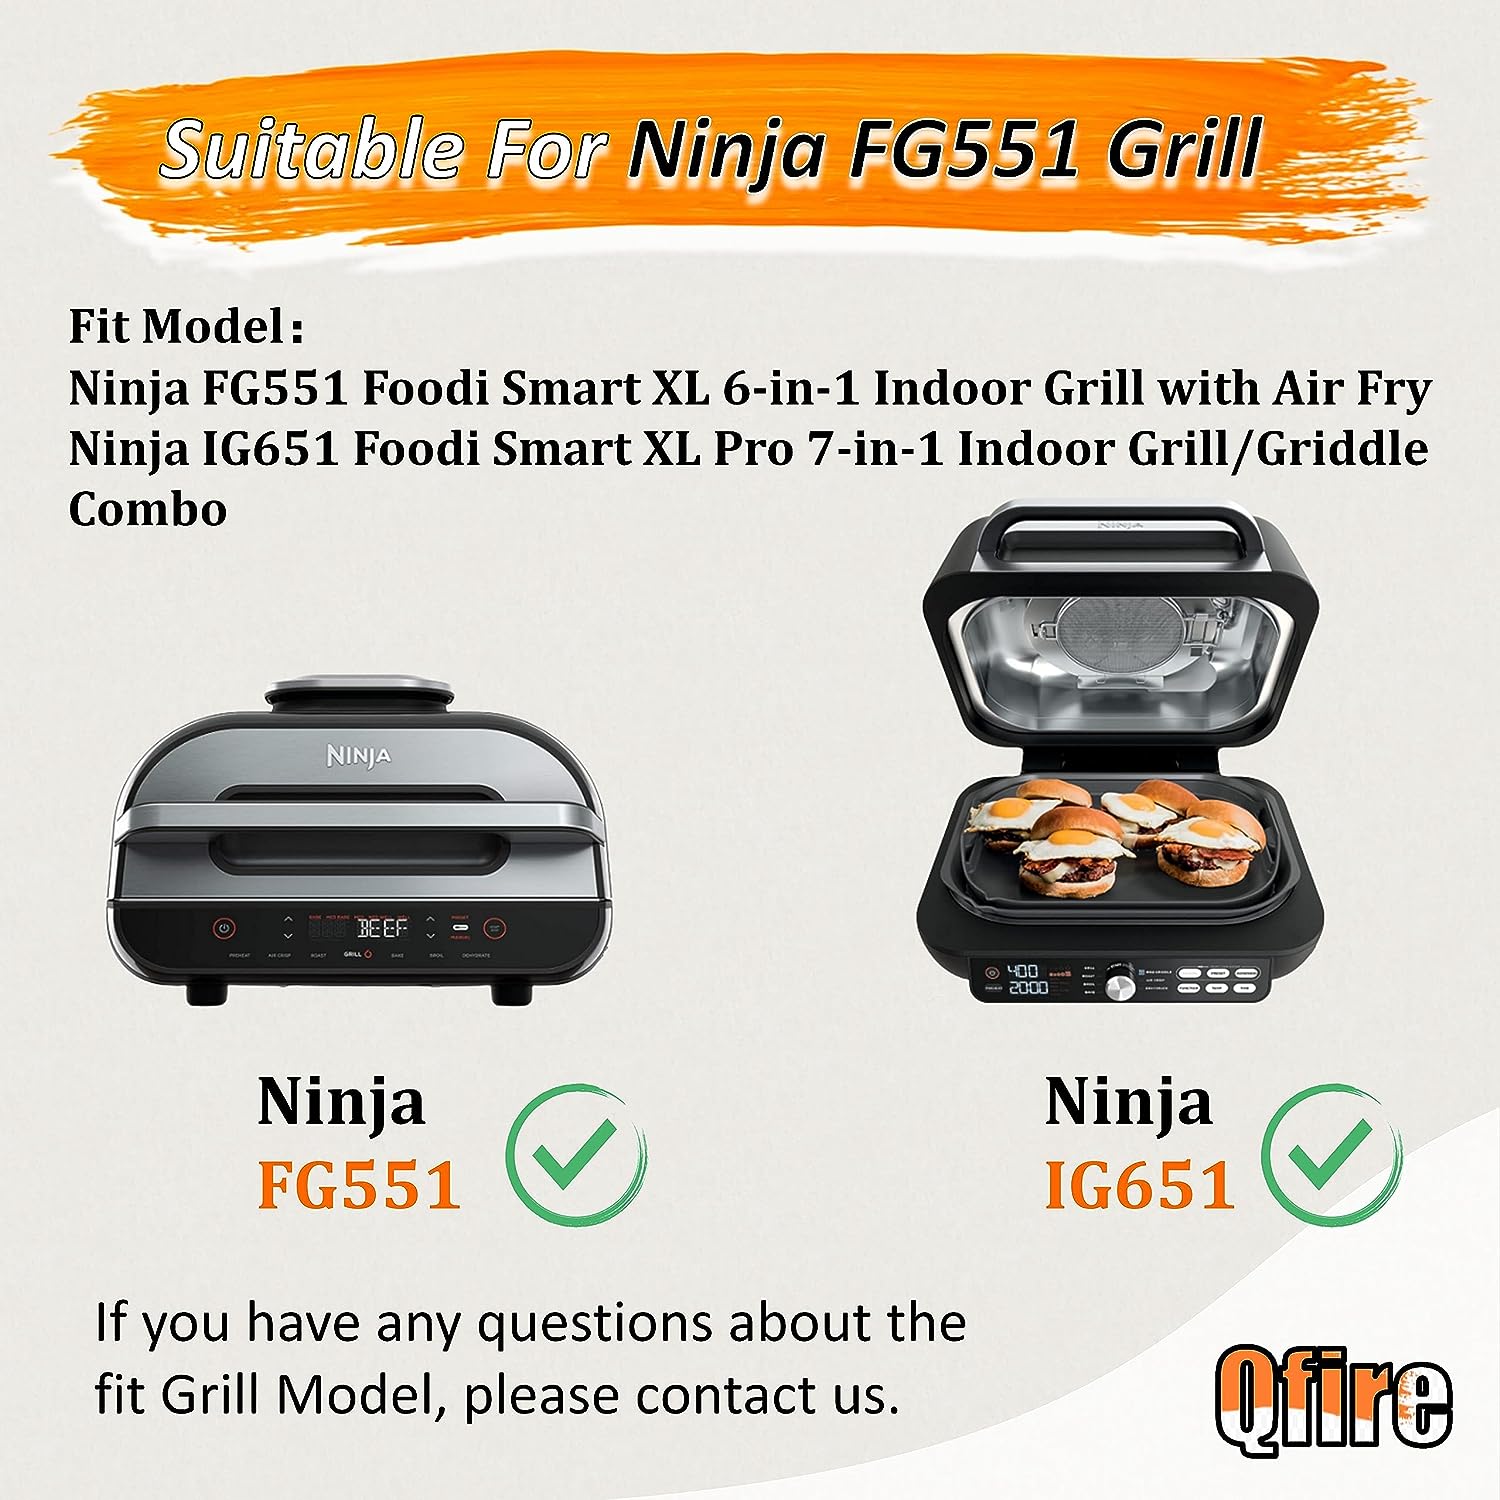  Ninja IG651 Foodi Smart XL Pro 7-in-1 Indoor Grill